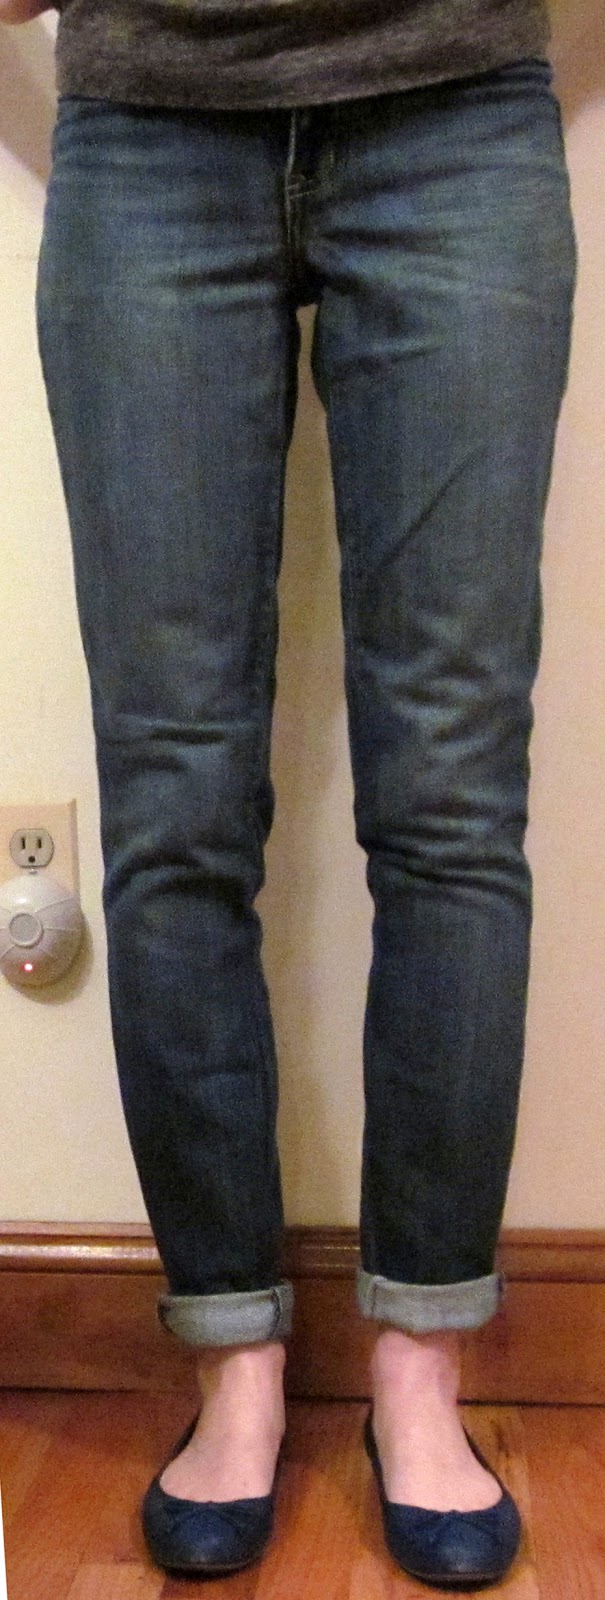 The Crafty Novice: DIY Jeans Refashion: Flares to Straight Leg